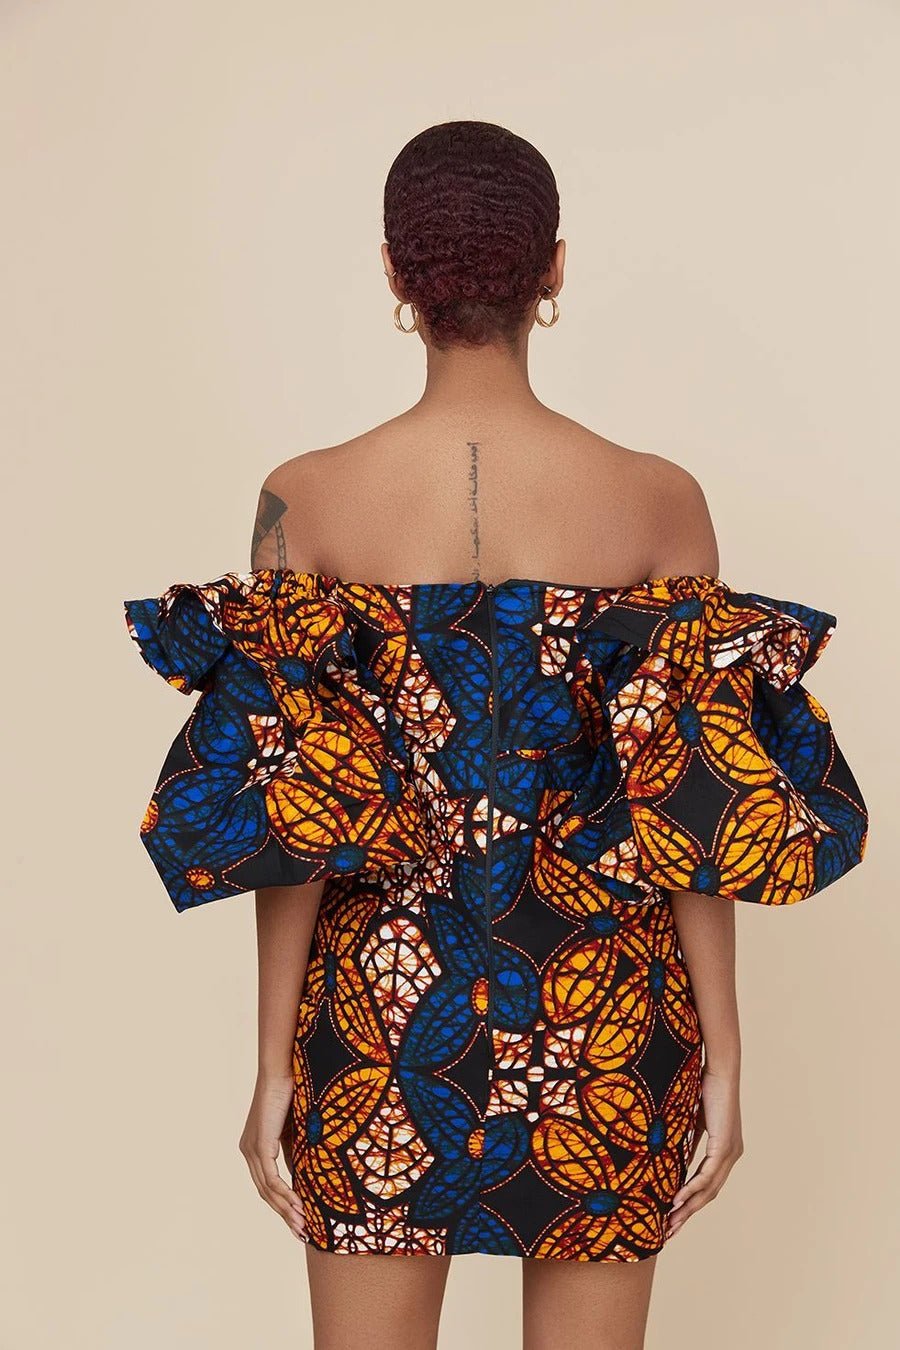 BLUE BROWN AFRICAN ANKARA PRINT PLUS SIZE SHORT PARTY DRESS - Africanclothinghub UK, US, Canada